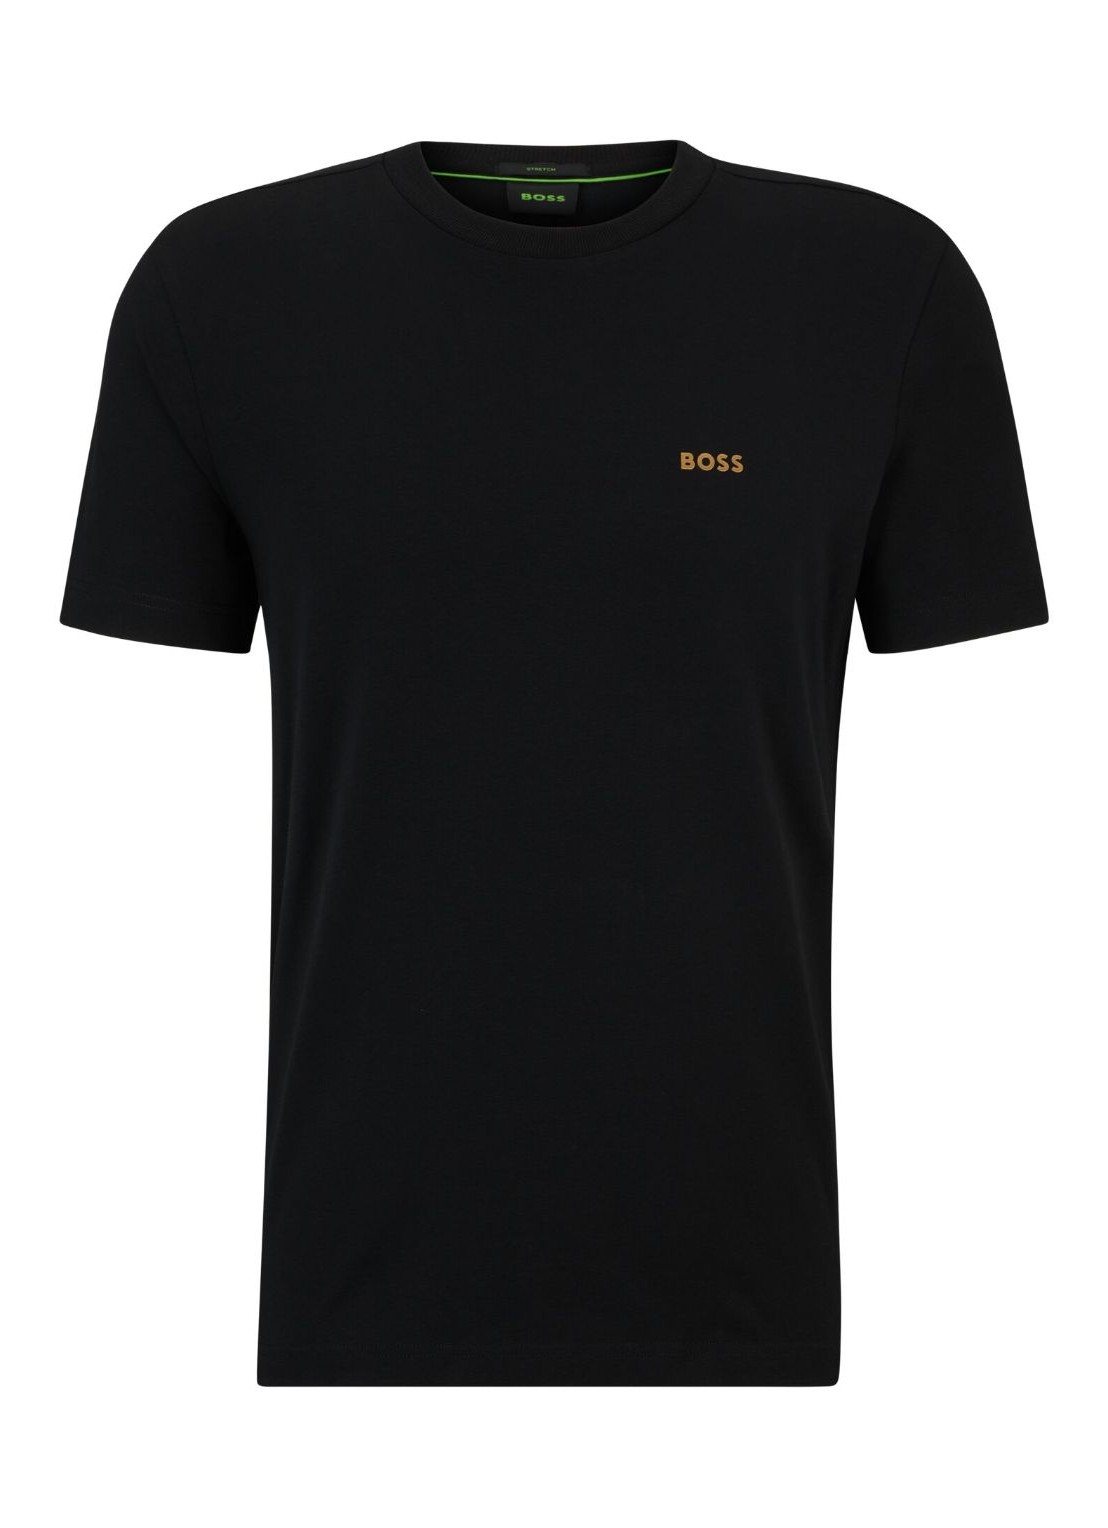 Camiseta boss t-shirt mantee - 50506373 002 talla negro
 